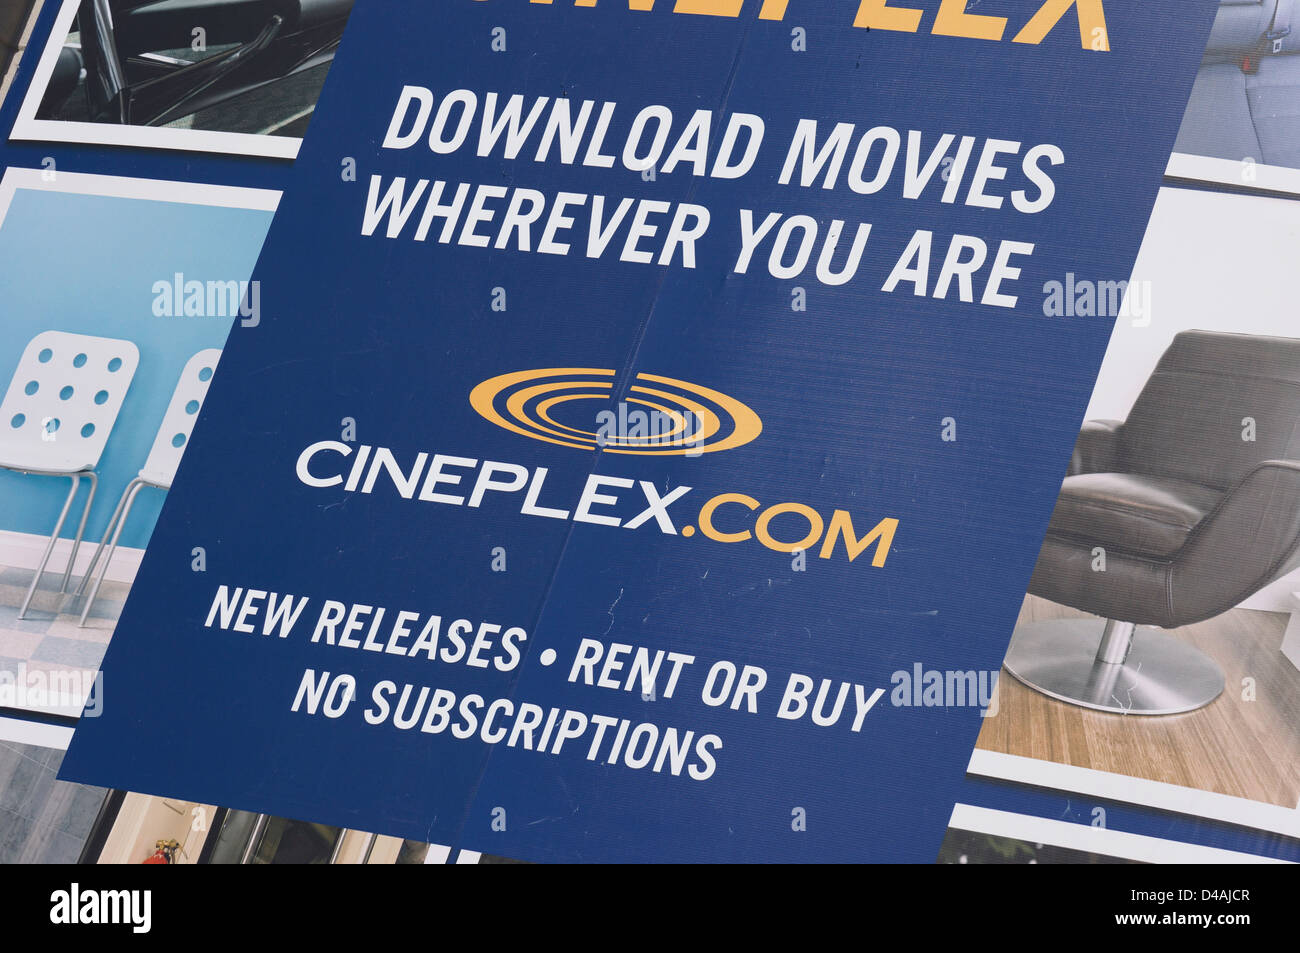 Cineplex Download Movies Ad closeup Stock Photo